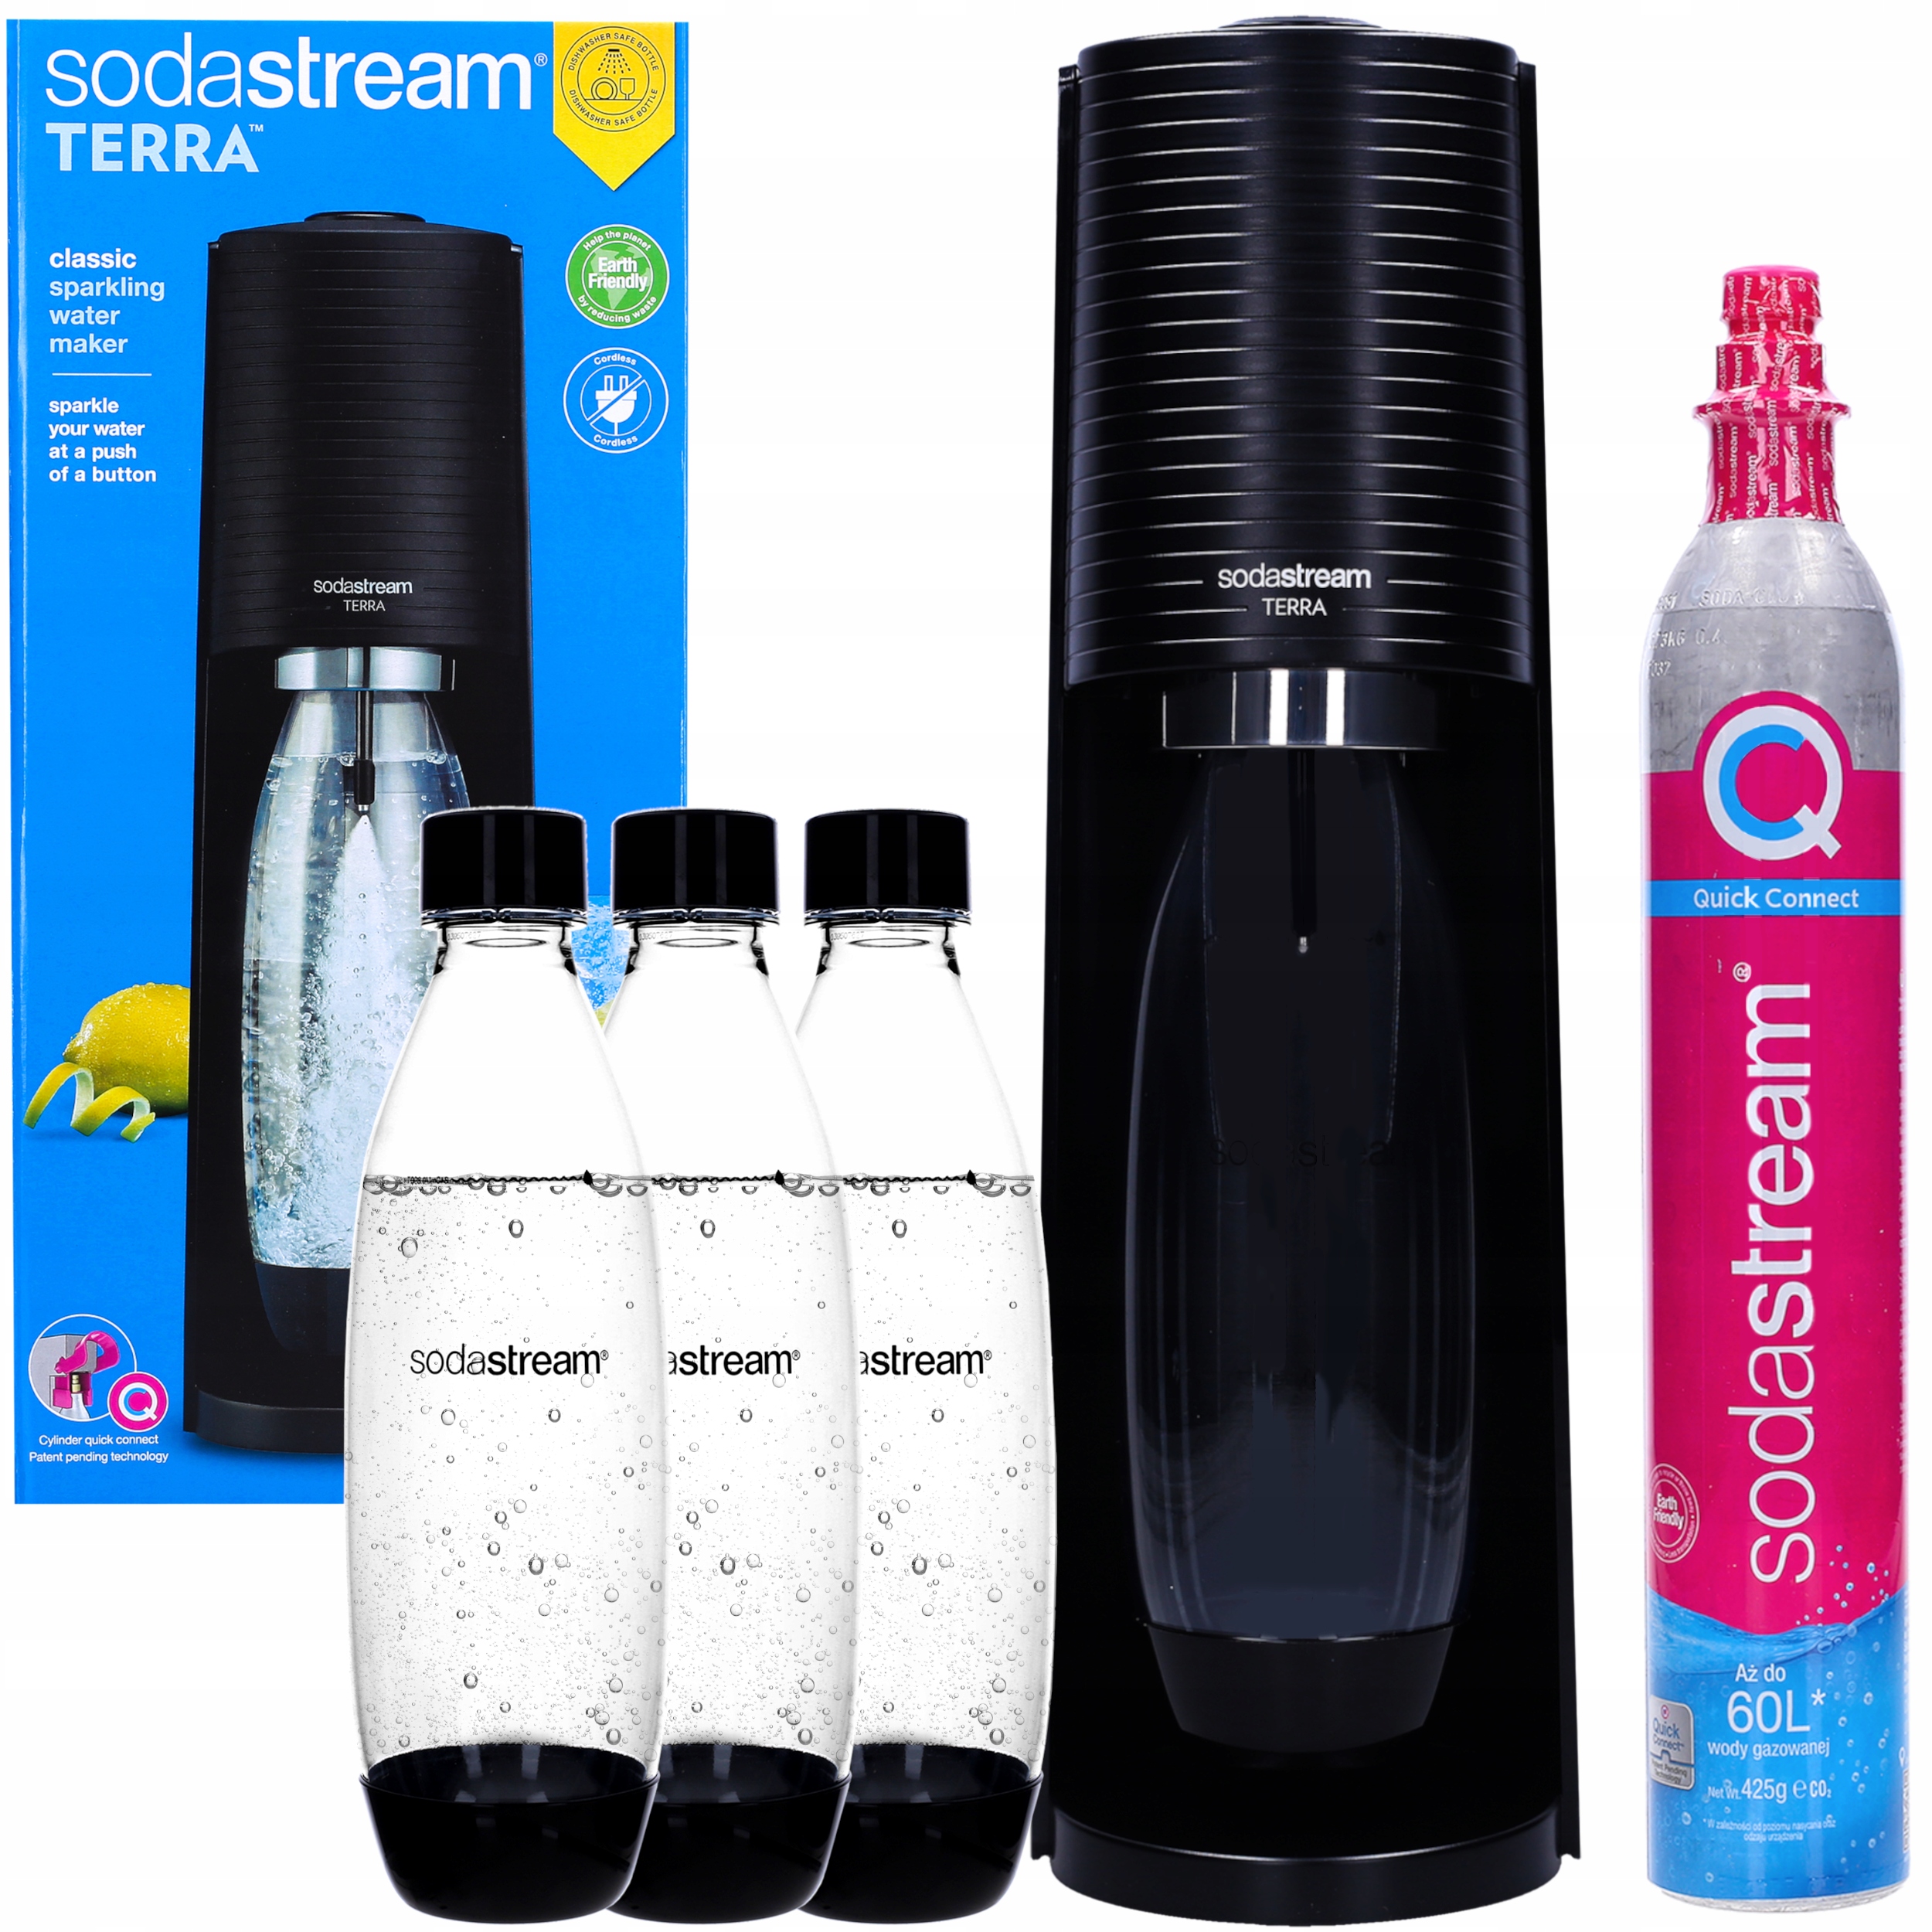 SodaStream Qc Terra Water Maker